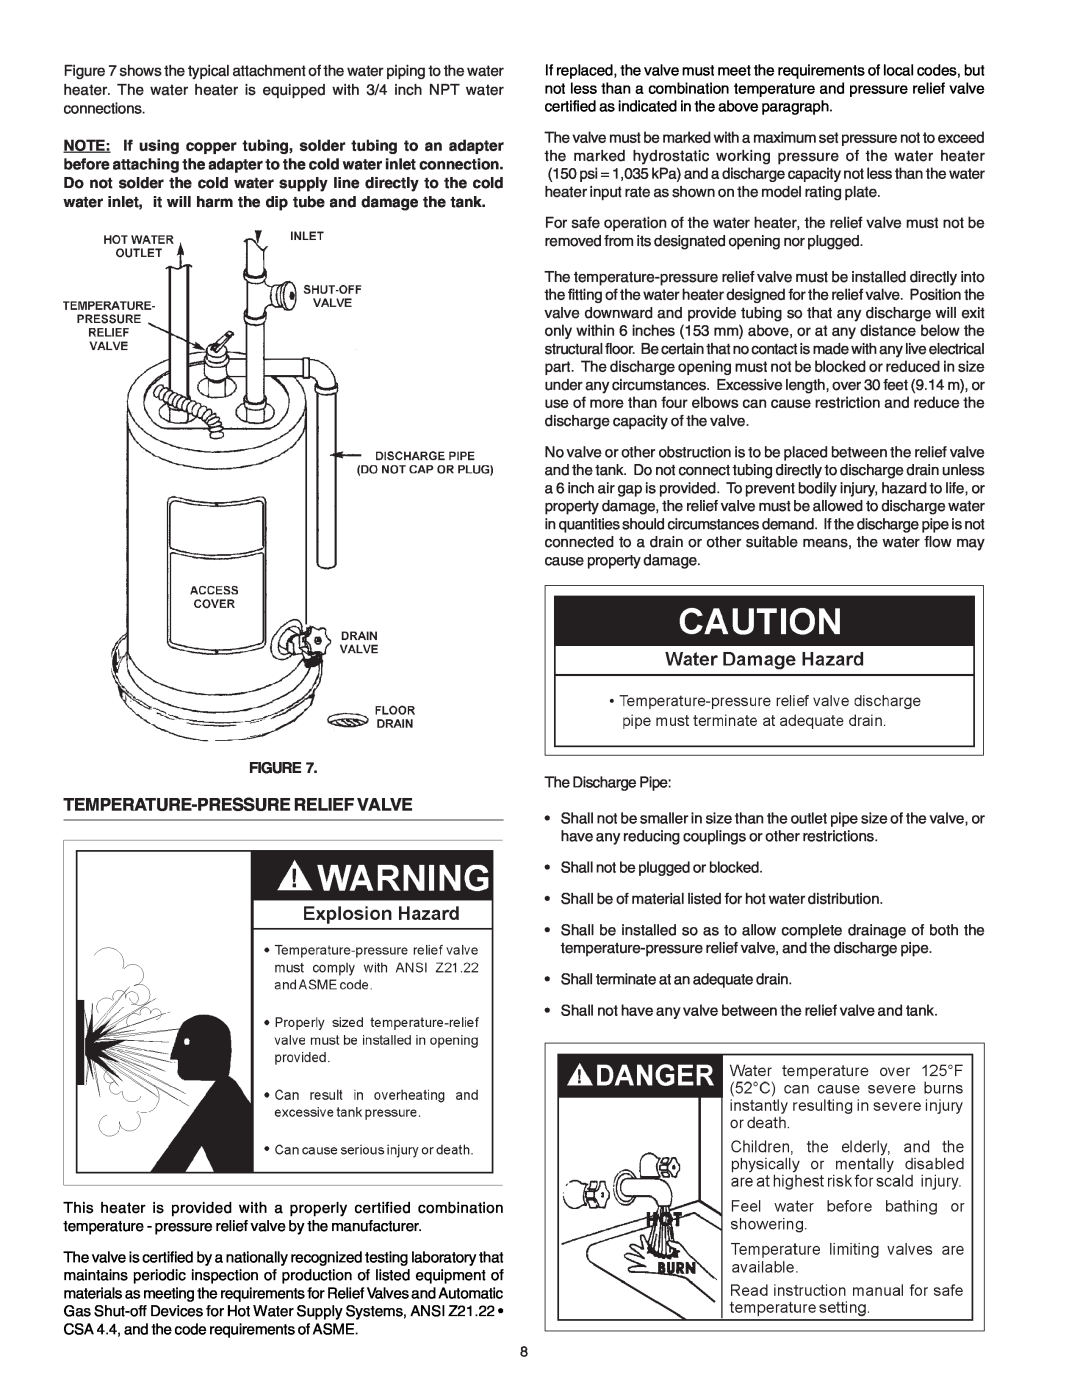 Reliance Water Heaters 184735-000 instruction manual Temperature-Pressurerelief Valve 